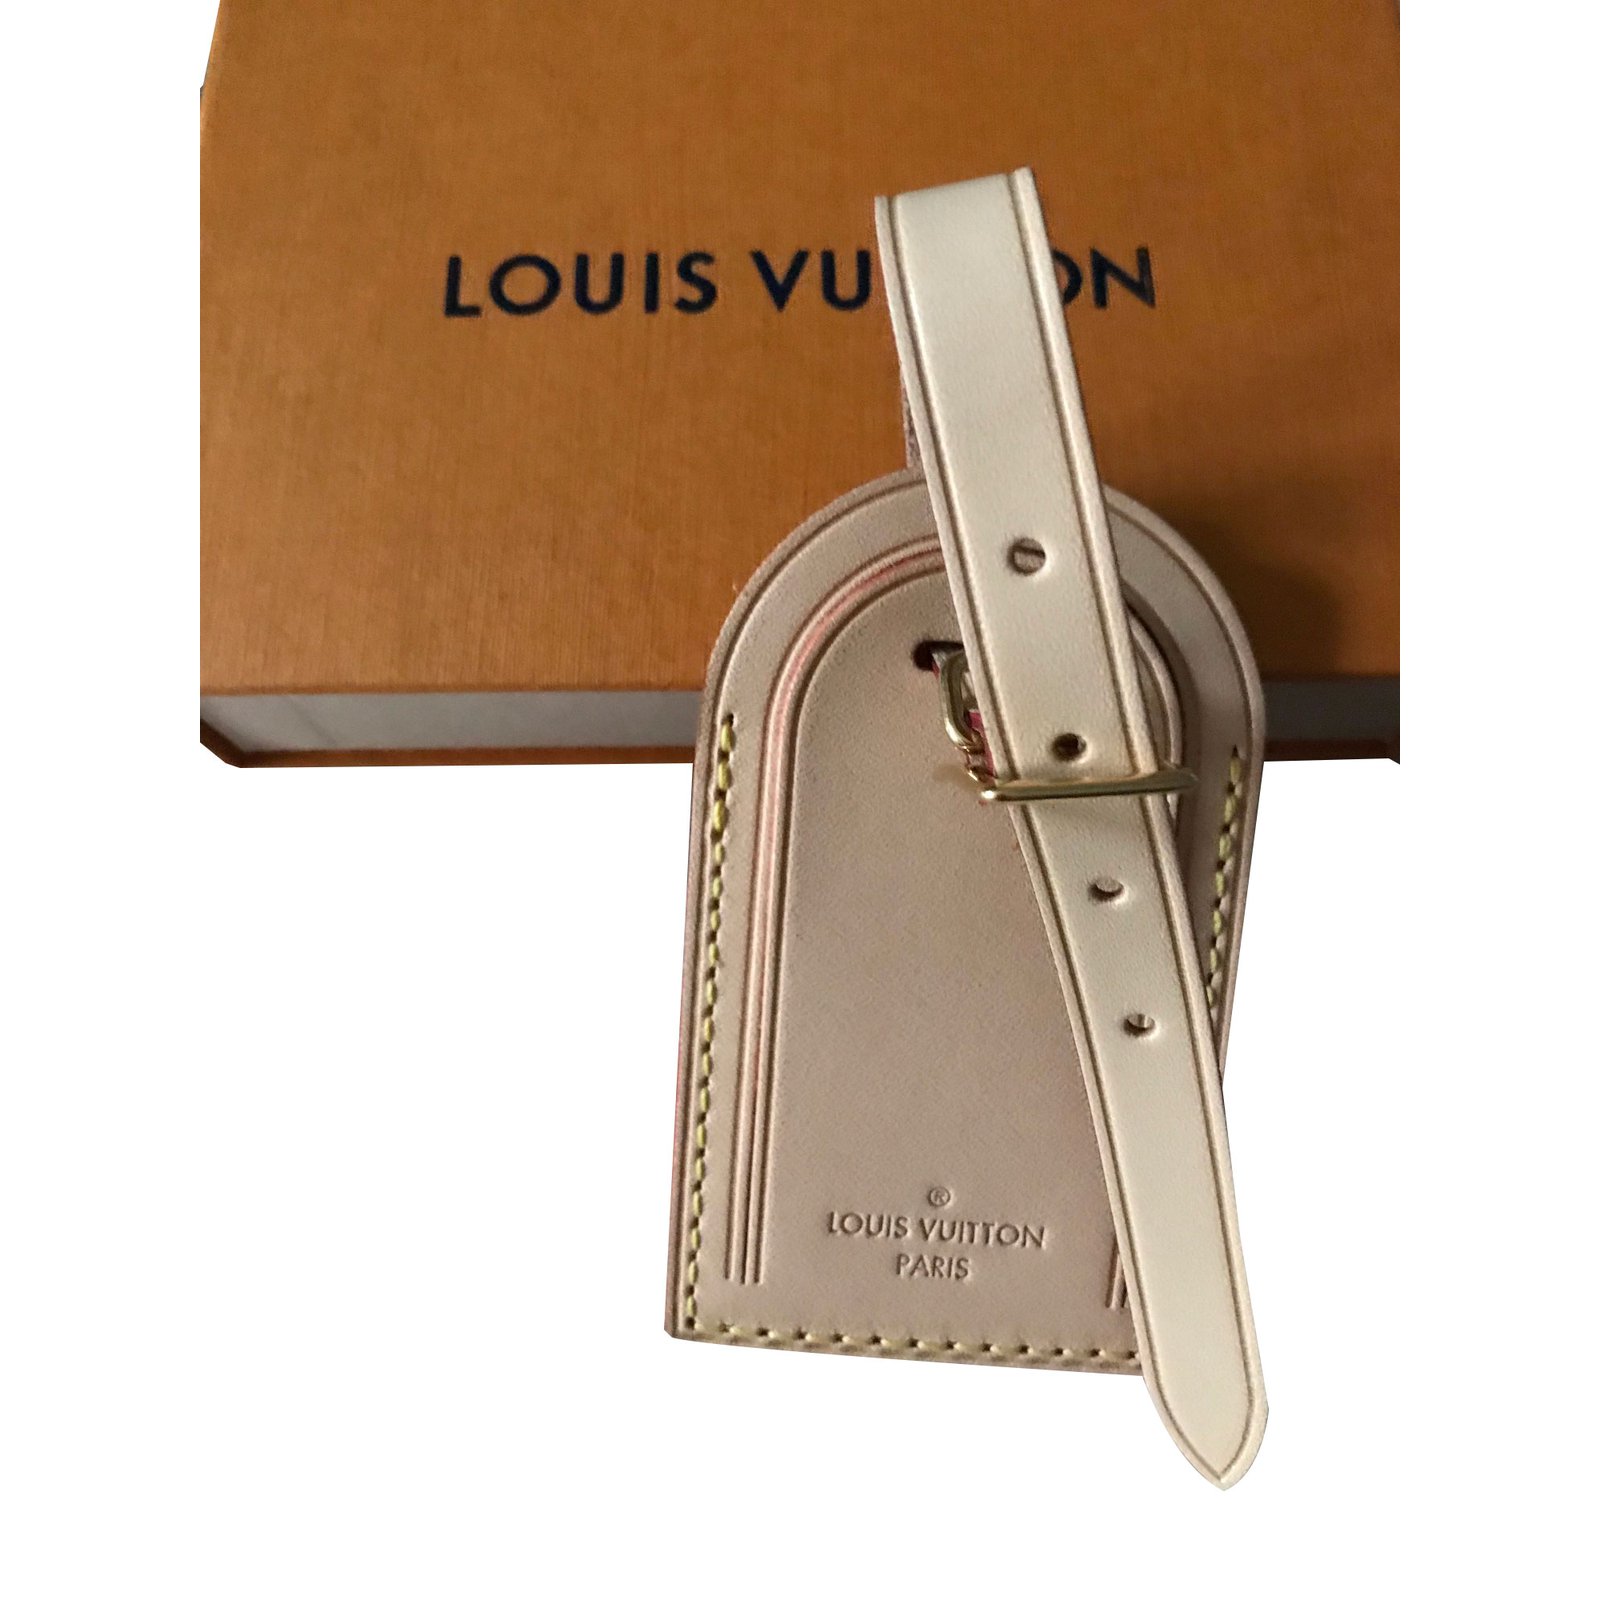 Louis Vuitton Large luggage tag hot stamping Brooklyn Bridge